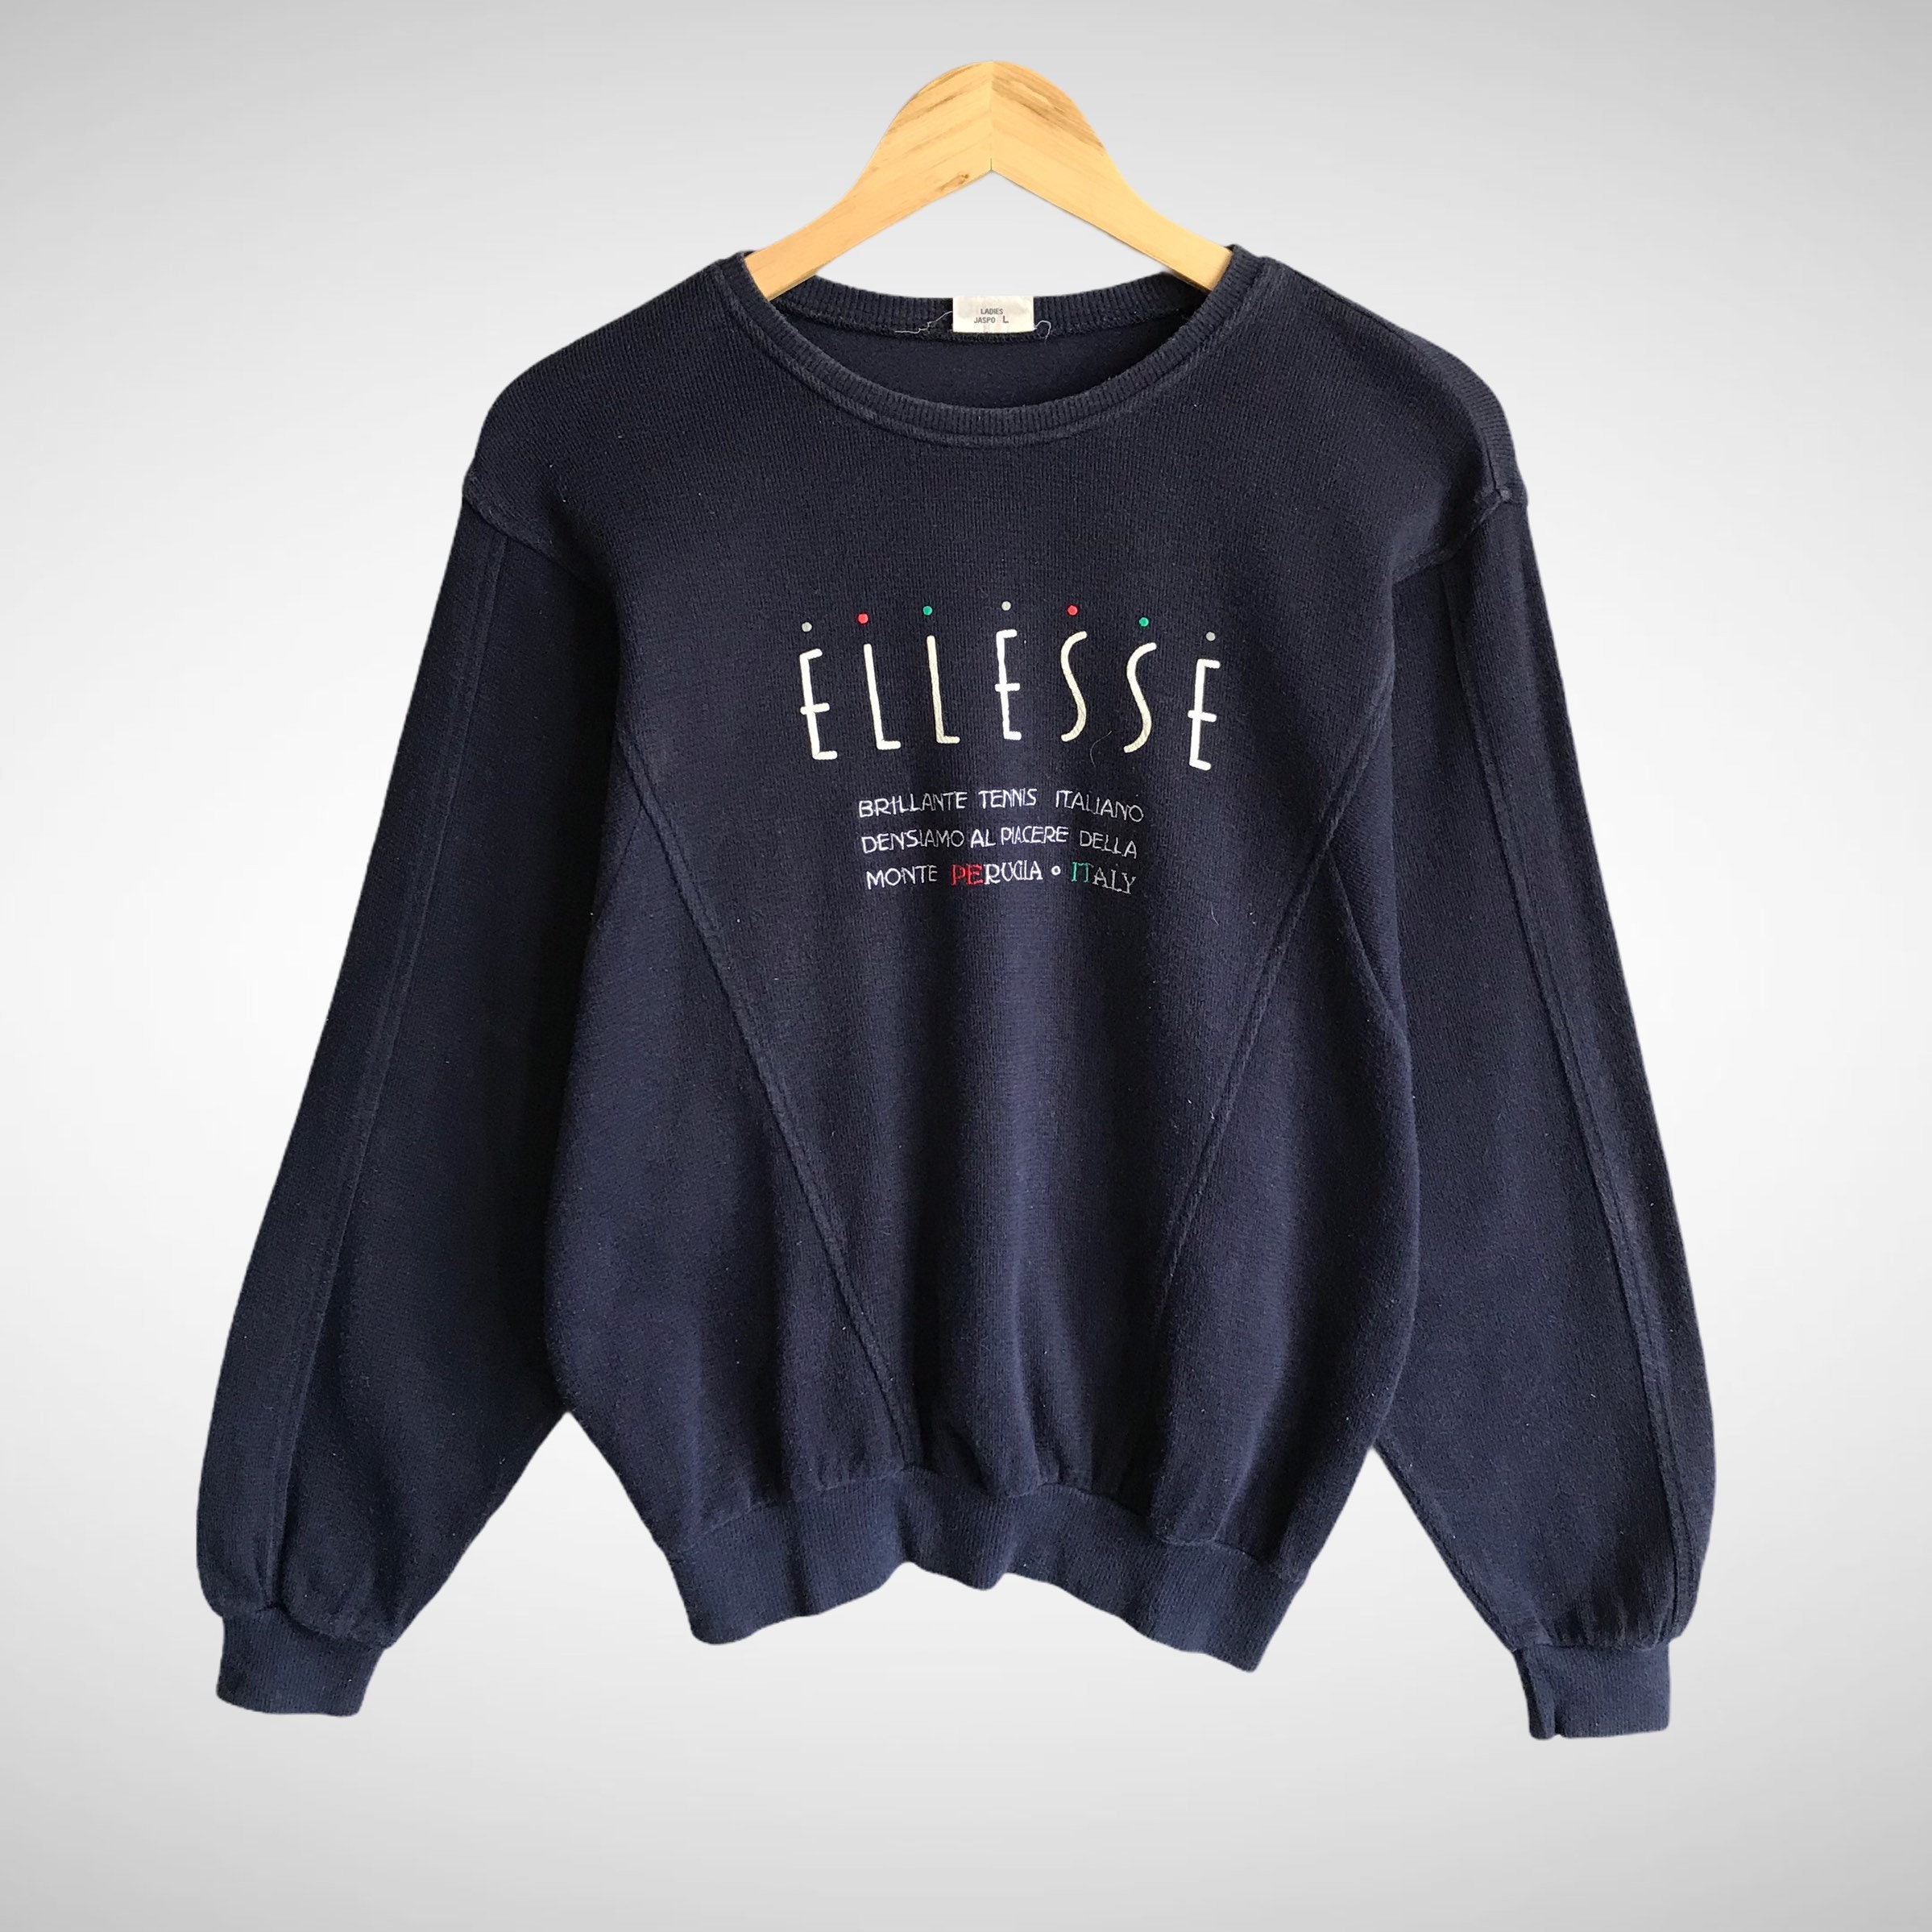 Ellesse Sweater - Etsy